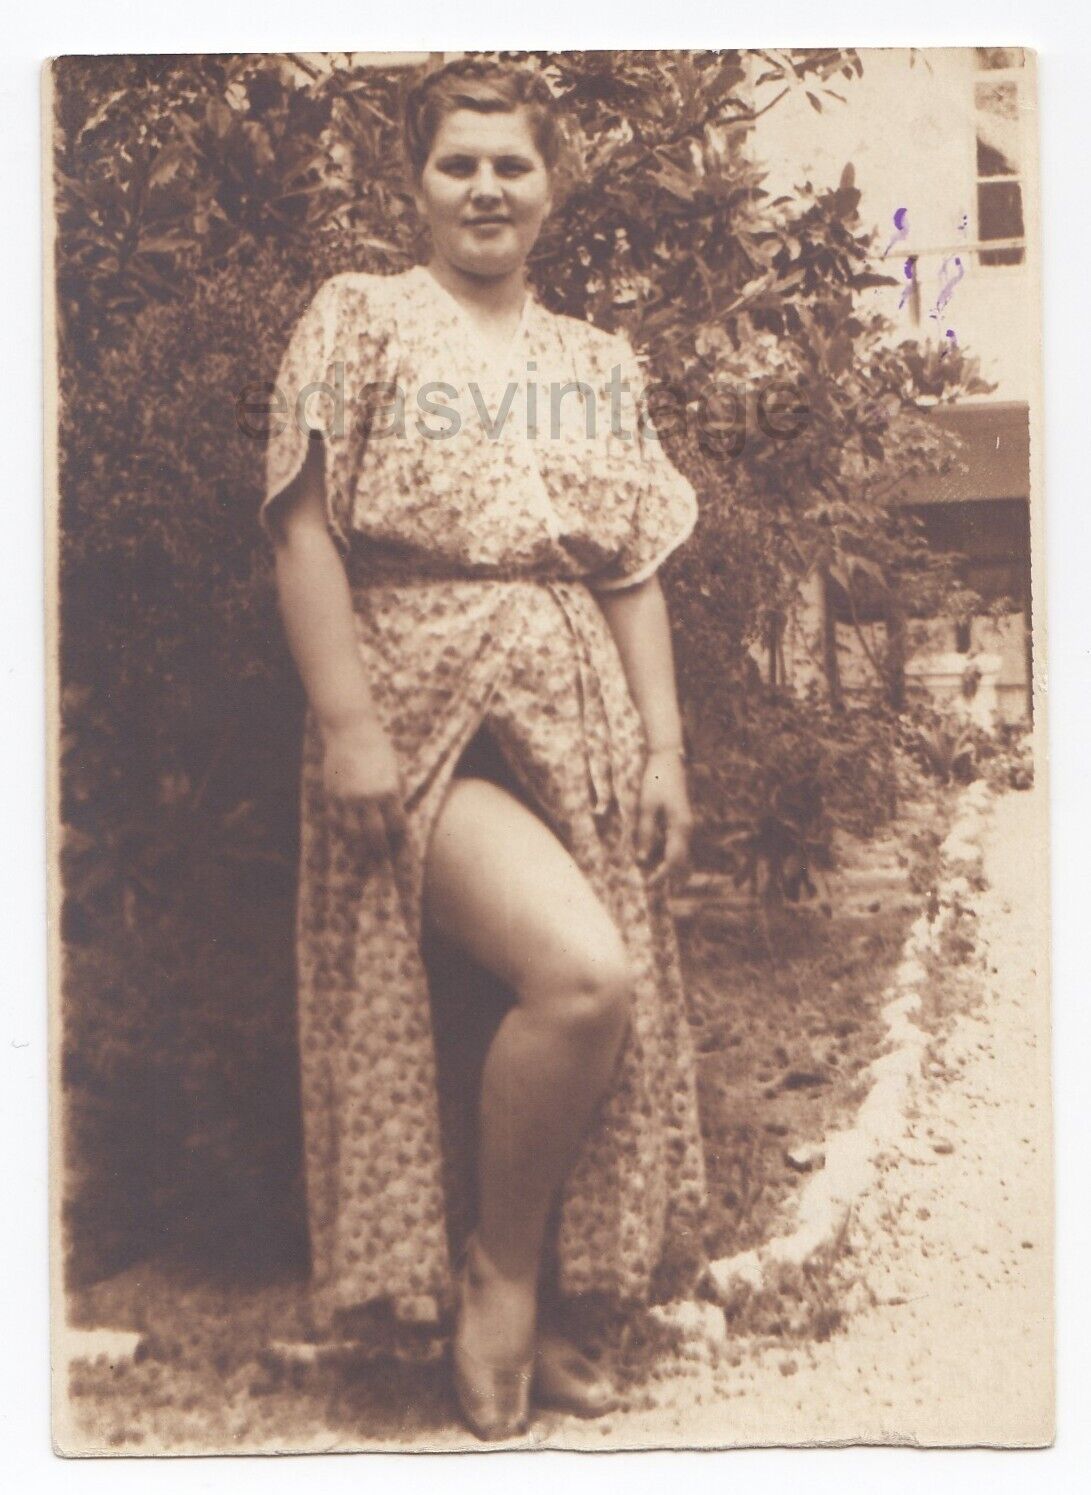 1950 Pretty woman posing Dress Short skirt Nice legs Attractive plump gal photo